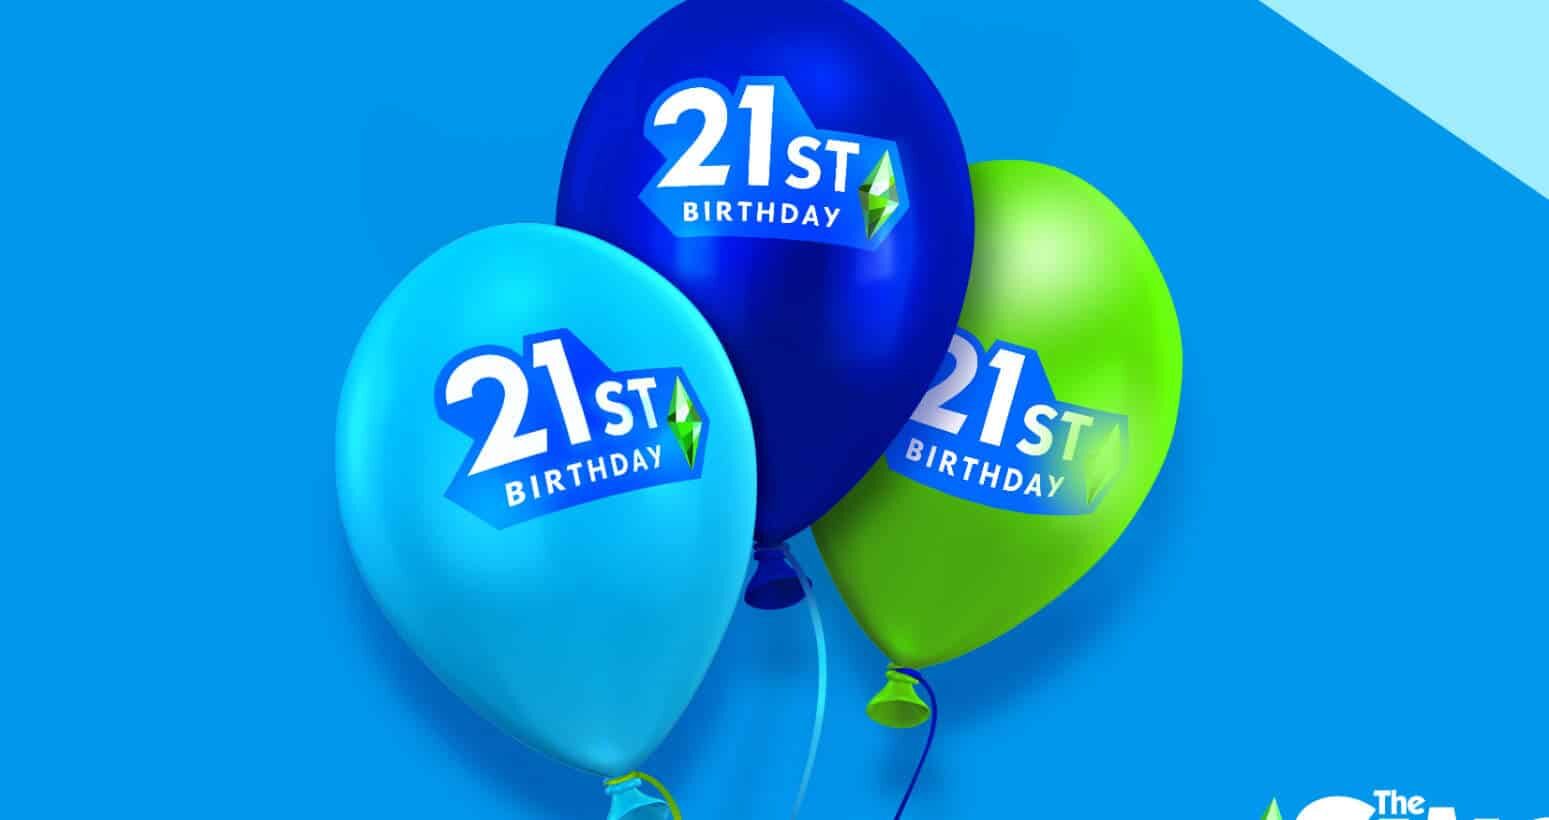 The Sims 21st Anniversary Birthday Celebration